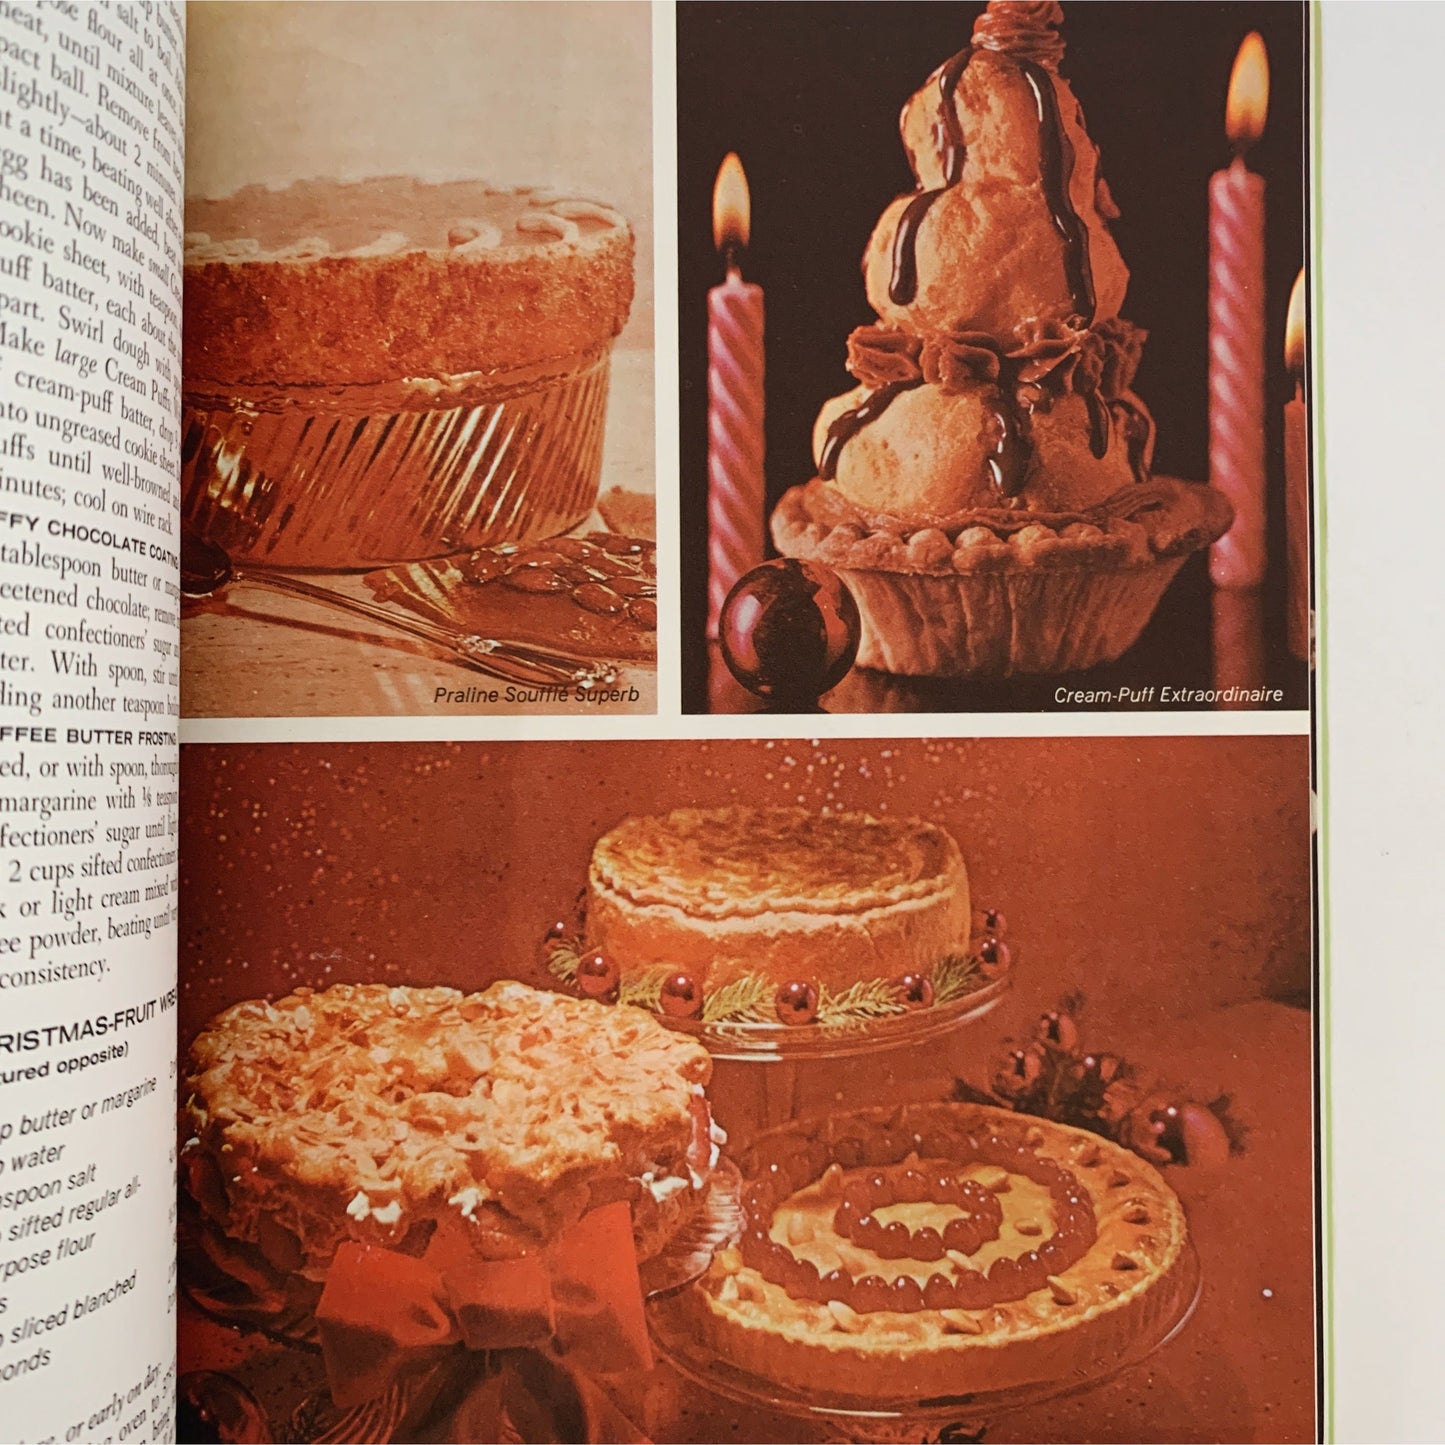 Good Housekeeping's Complete Christmas Cookbook, 1967